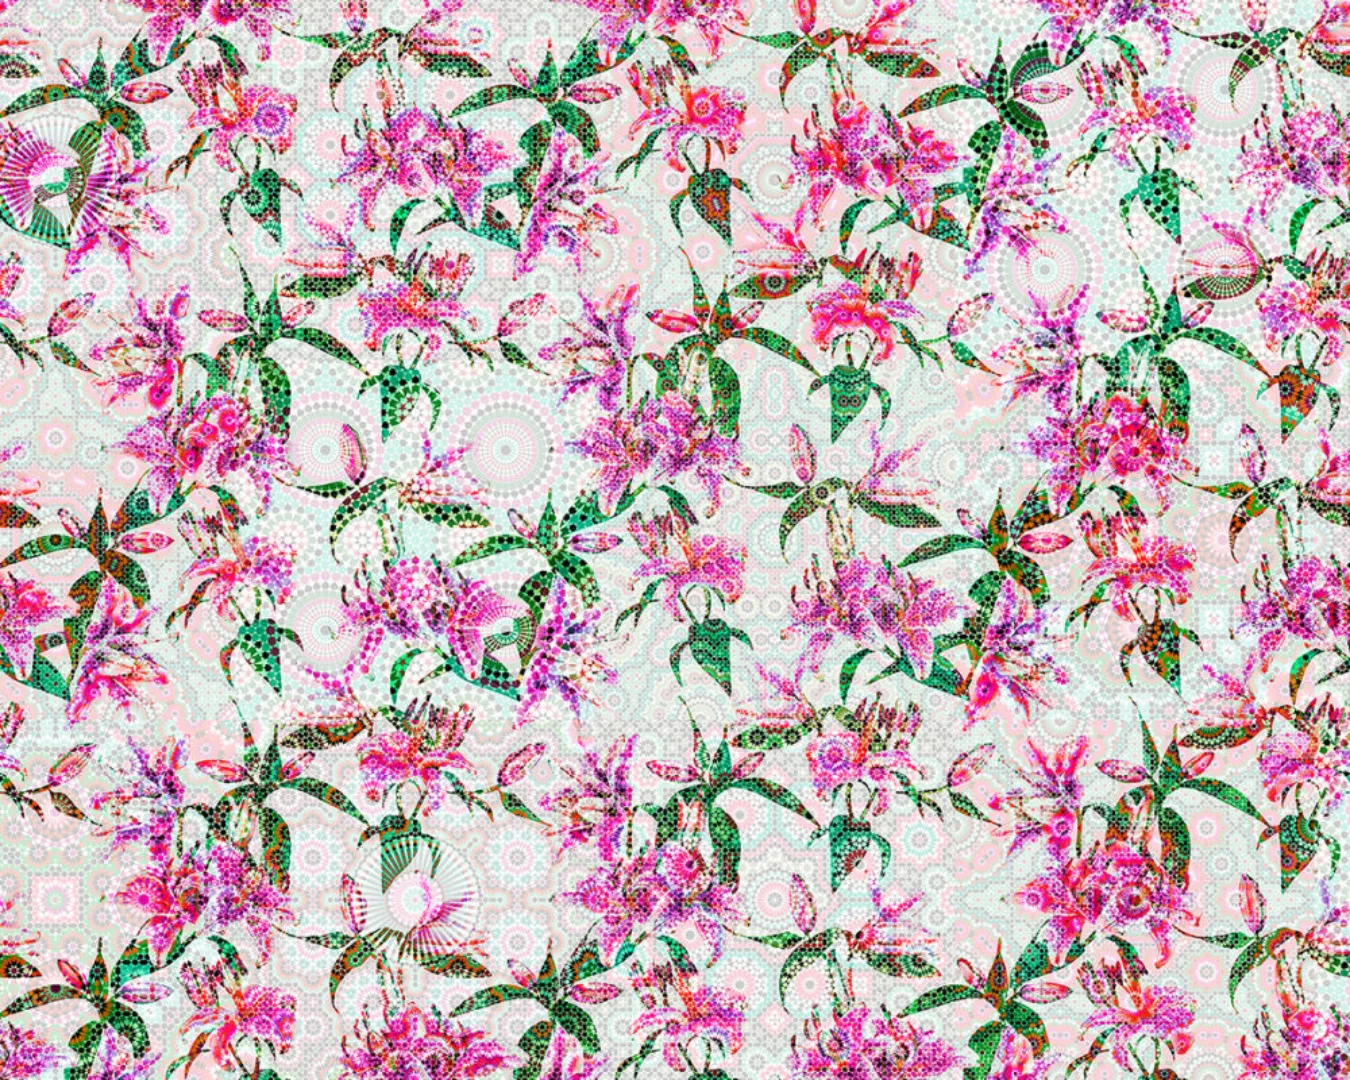 Fototapete "mosaic lilies2" 4,00x2,70 m / Glattvlies Perlmutt günstig online kaufen